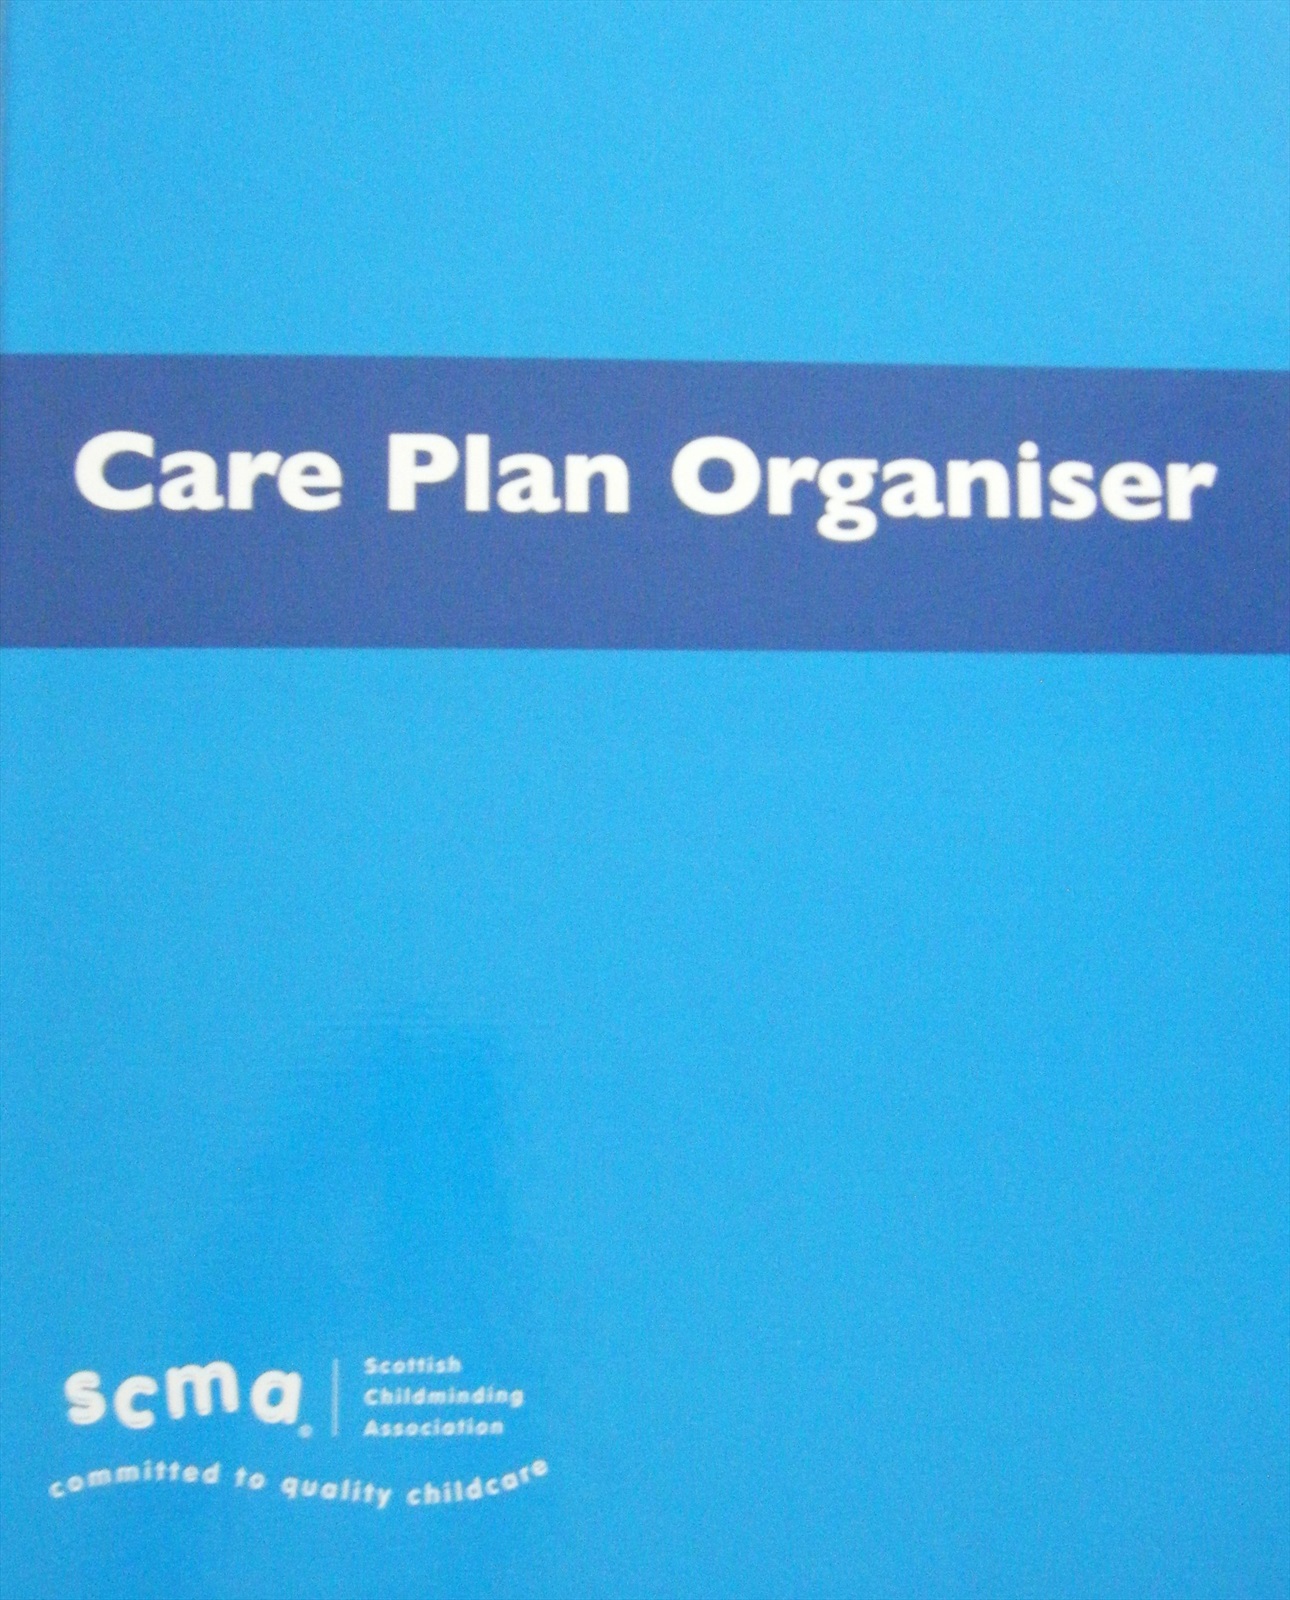 New updates for the SCMA Care Plan Organiser